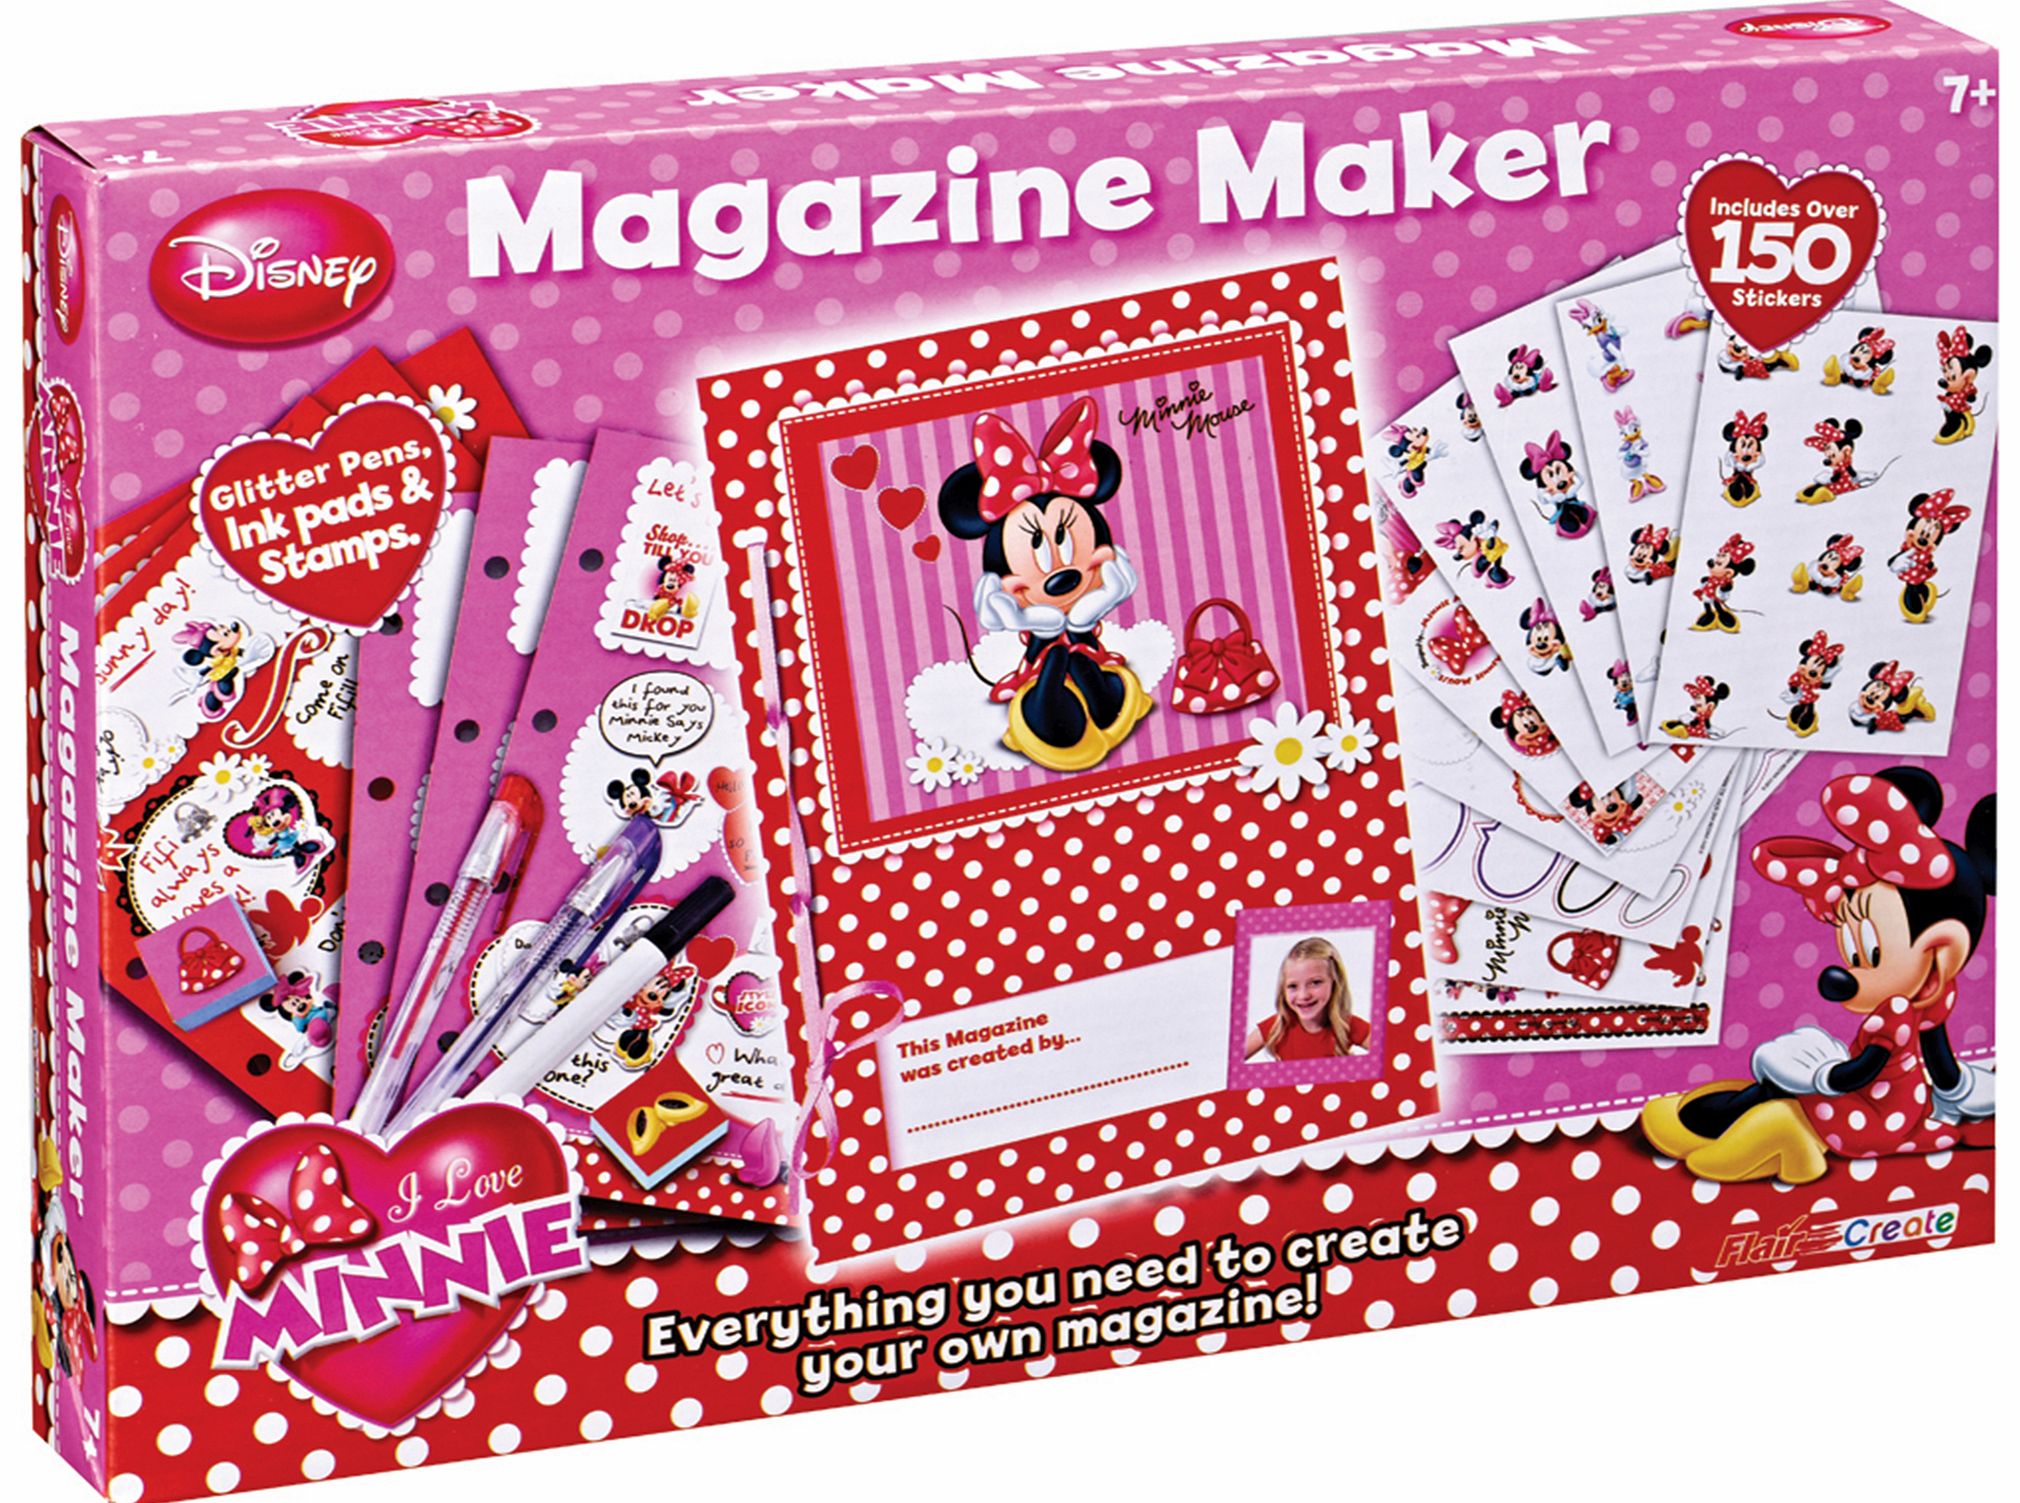 Minnie Mouse Magazine Maker